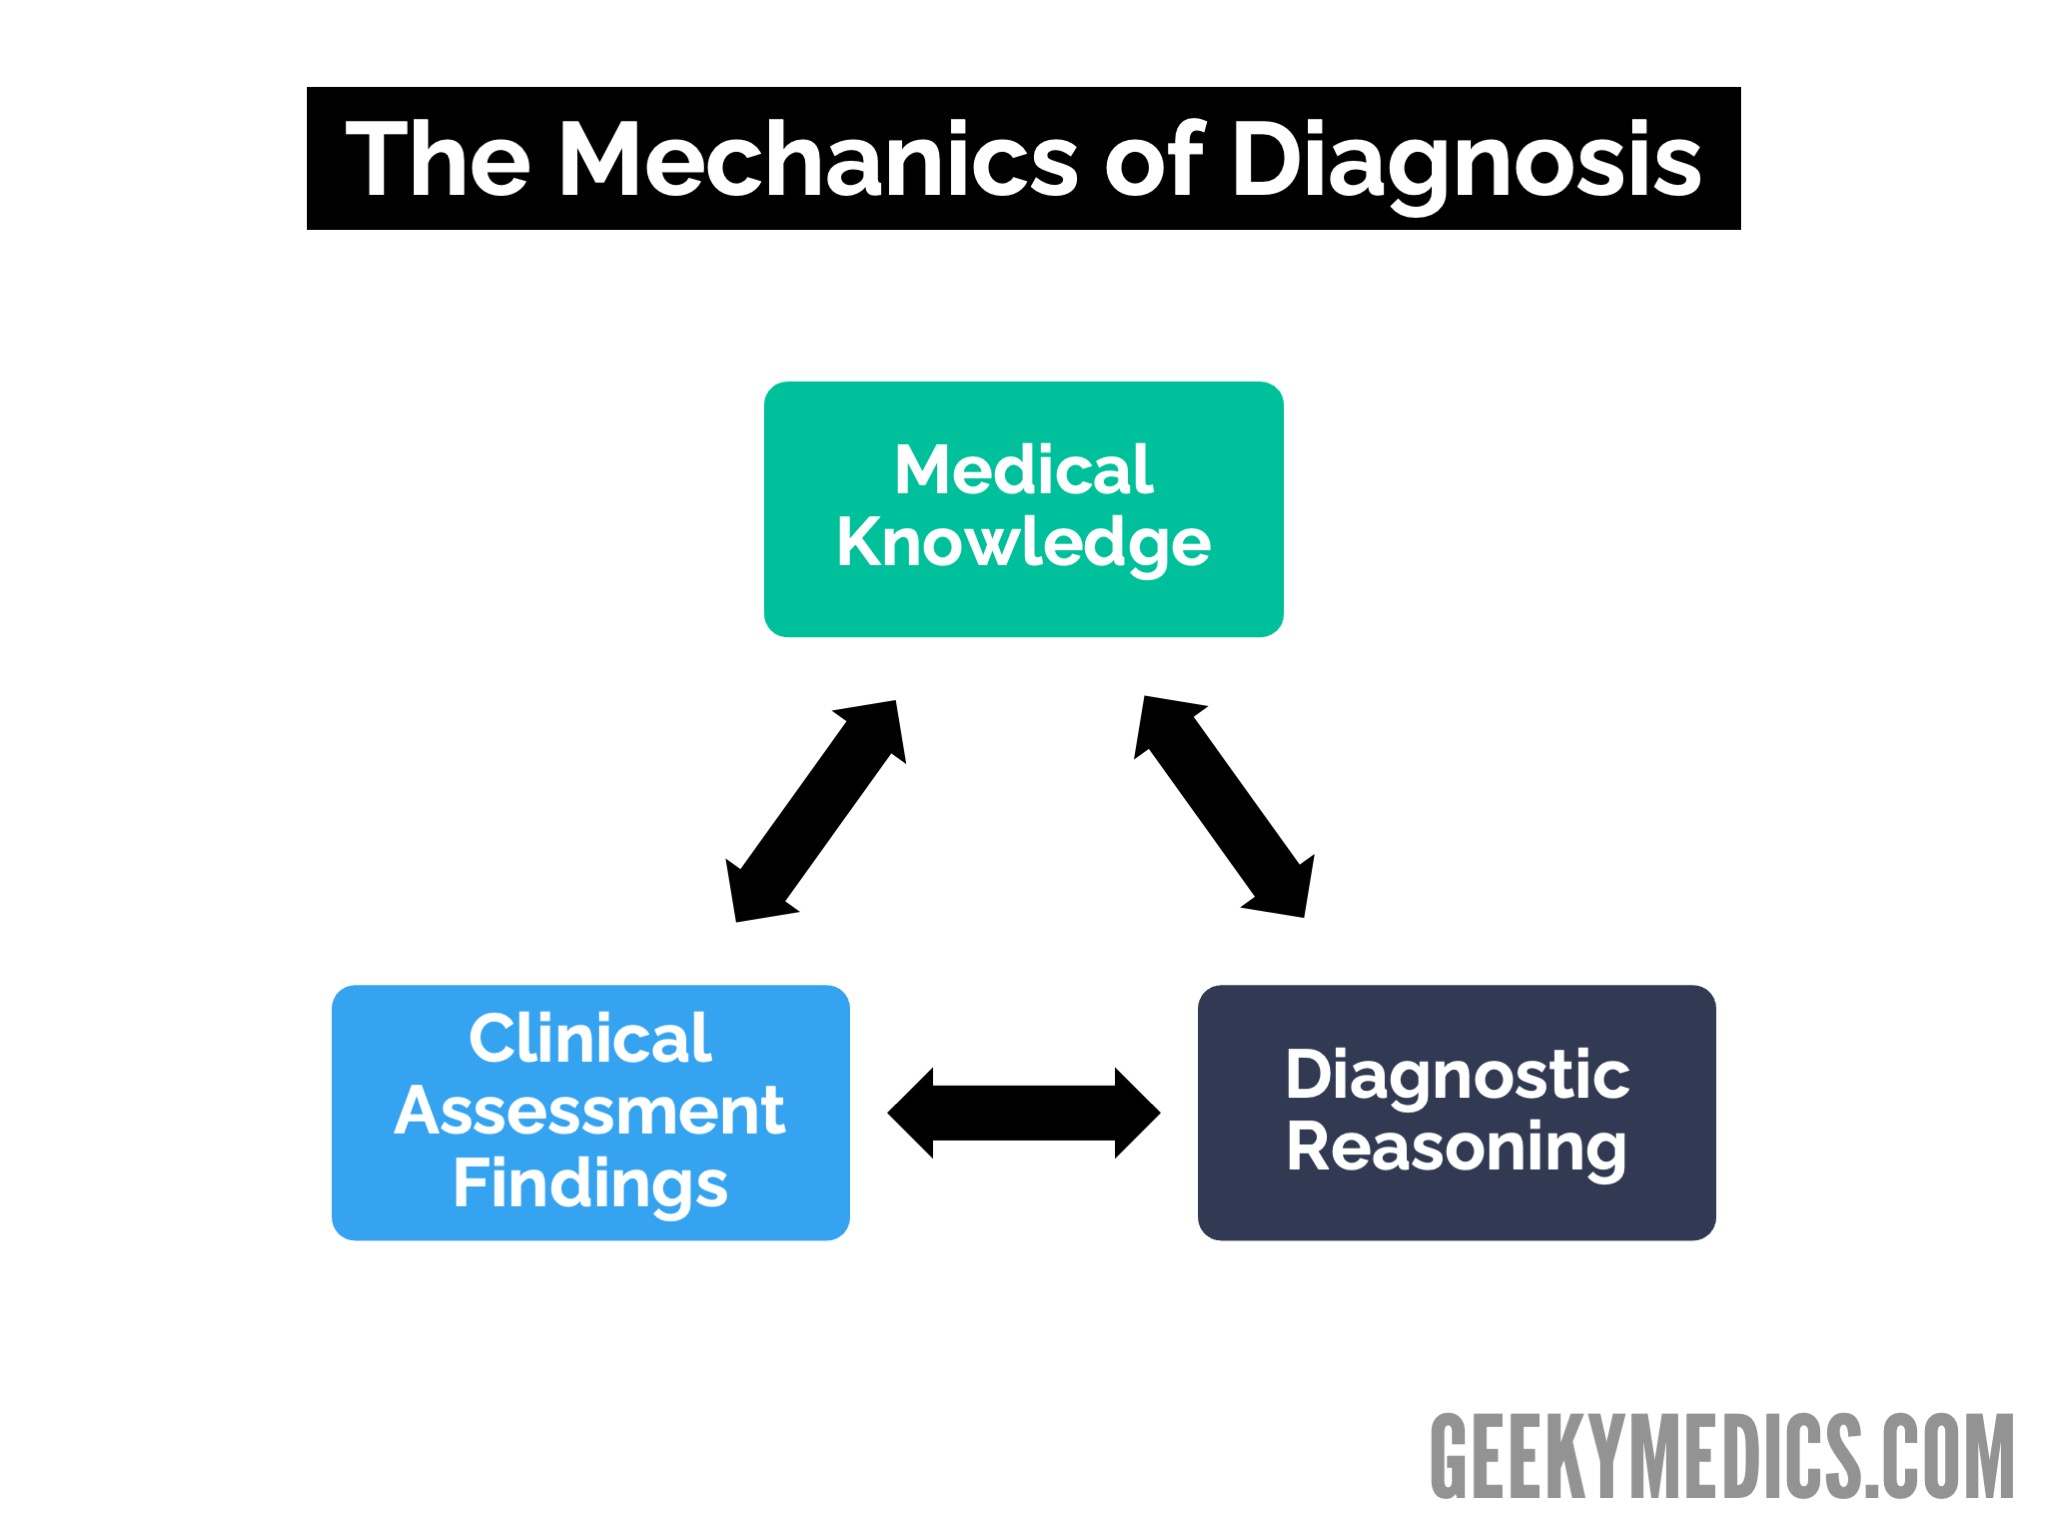 The mechanics of diagnosis triad